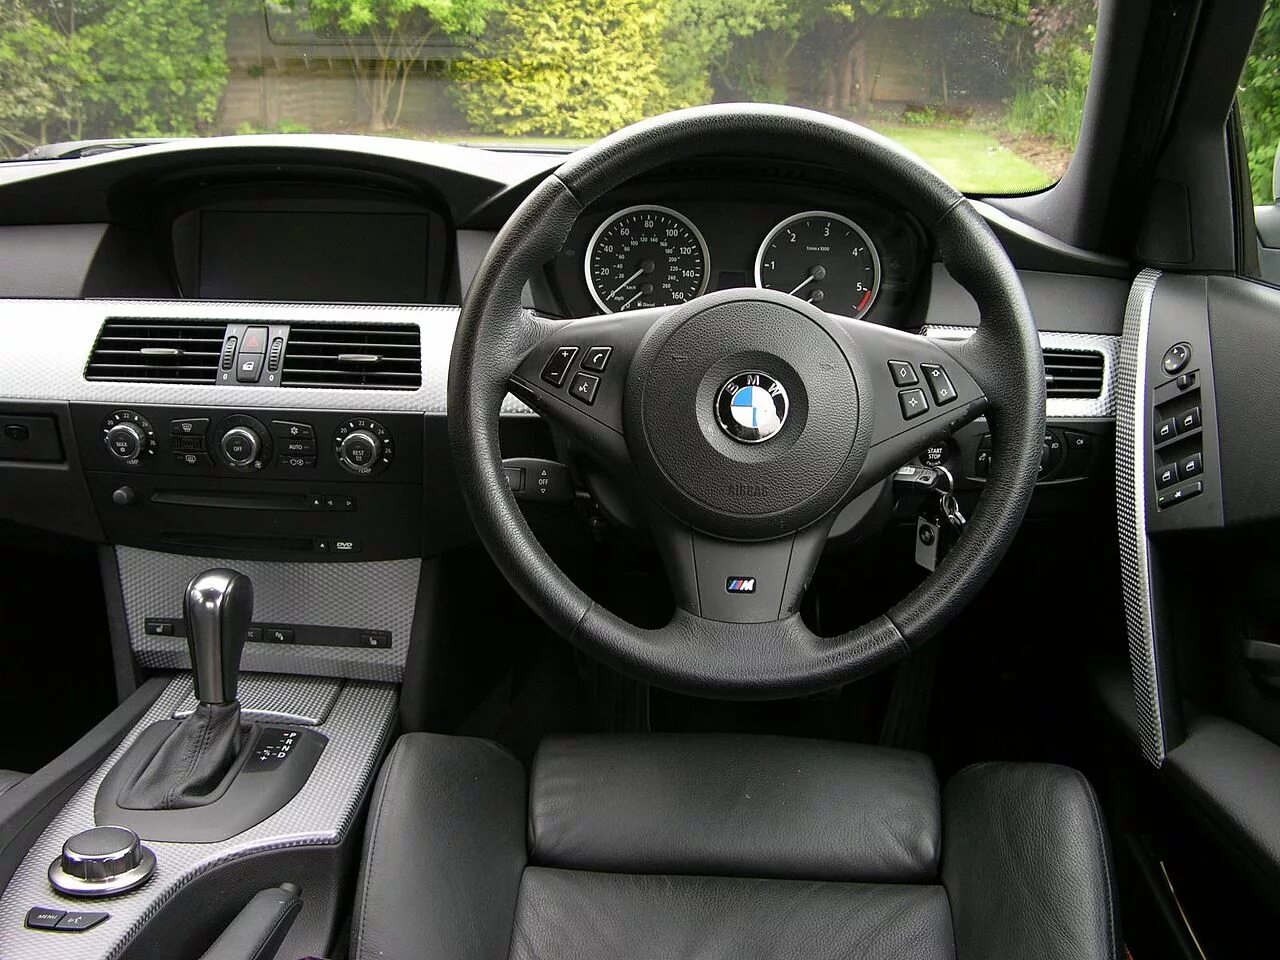 BMW e60 Interior. BMW e60 салон. BMW 5 e60 салон. BMW e60 530i.